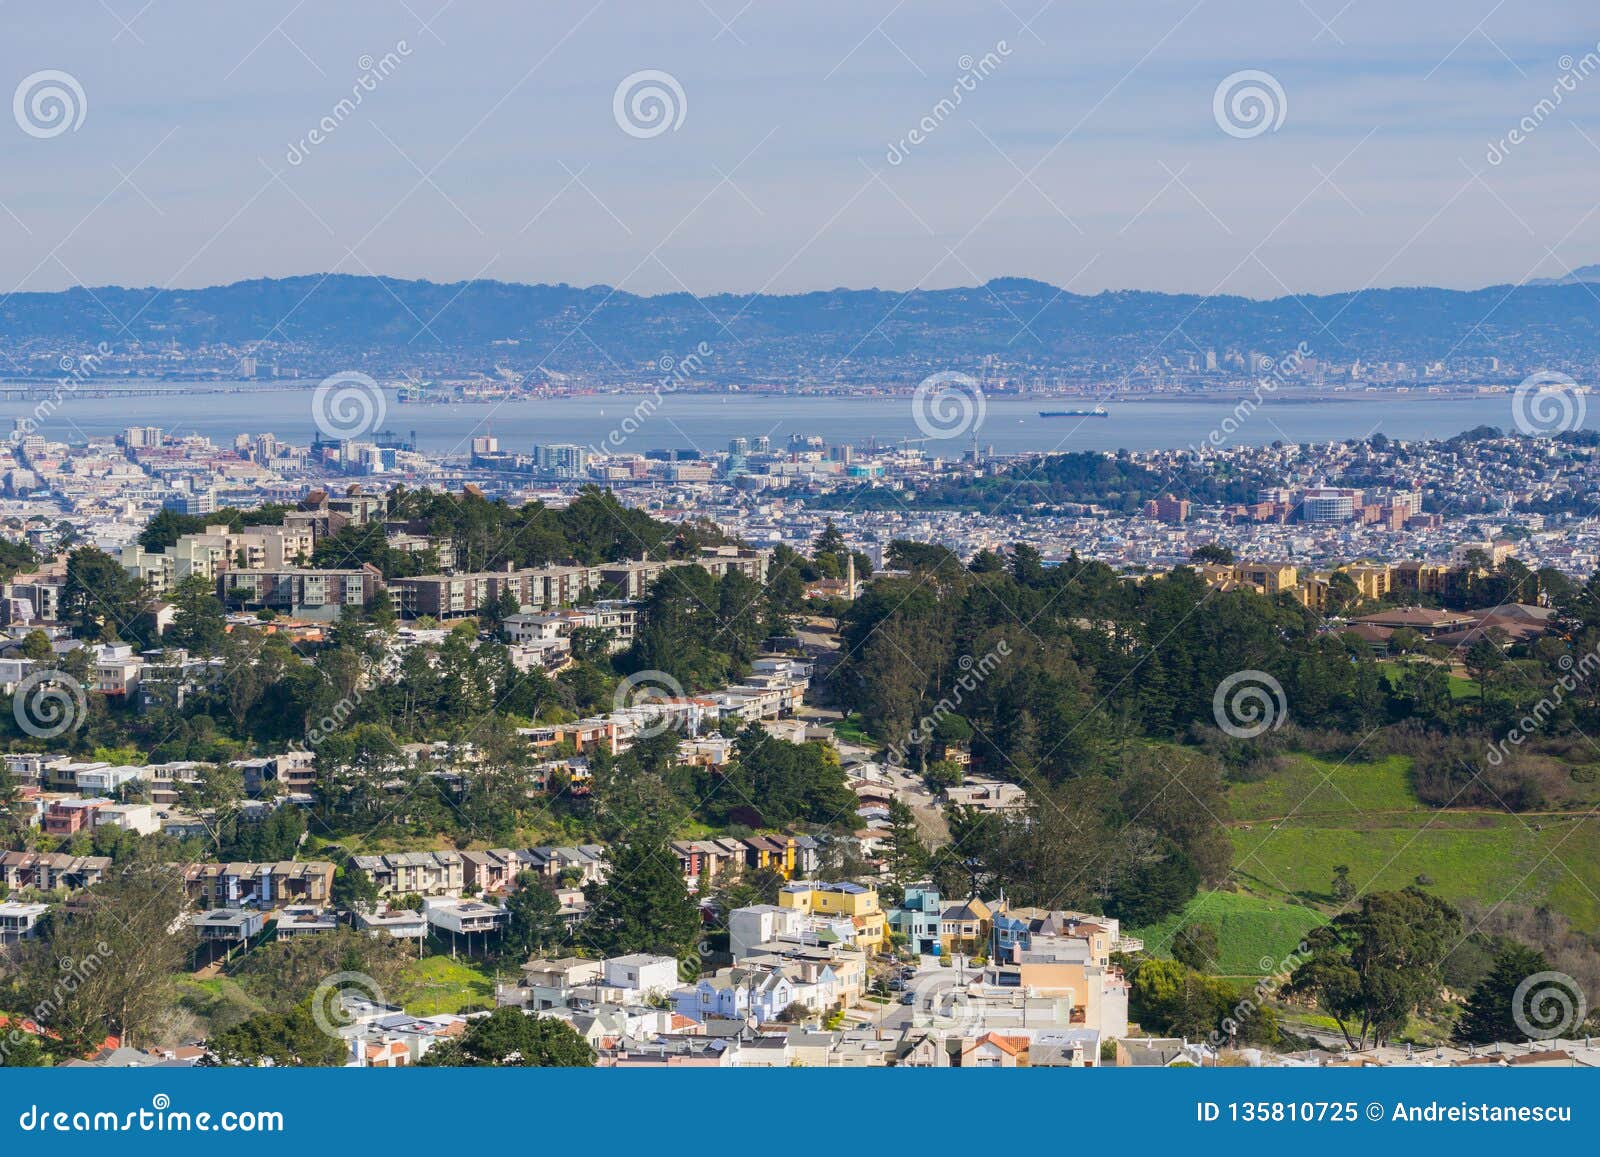 Aerial Views of Residential Areas of San Francisco, San Francisco Bay ...